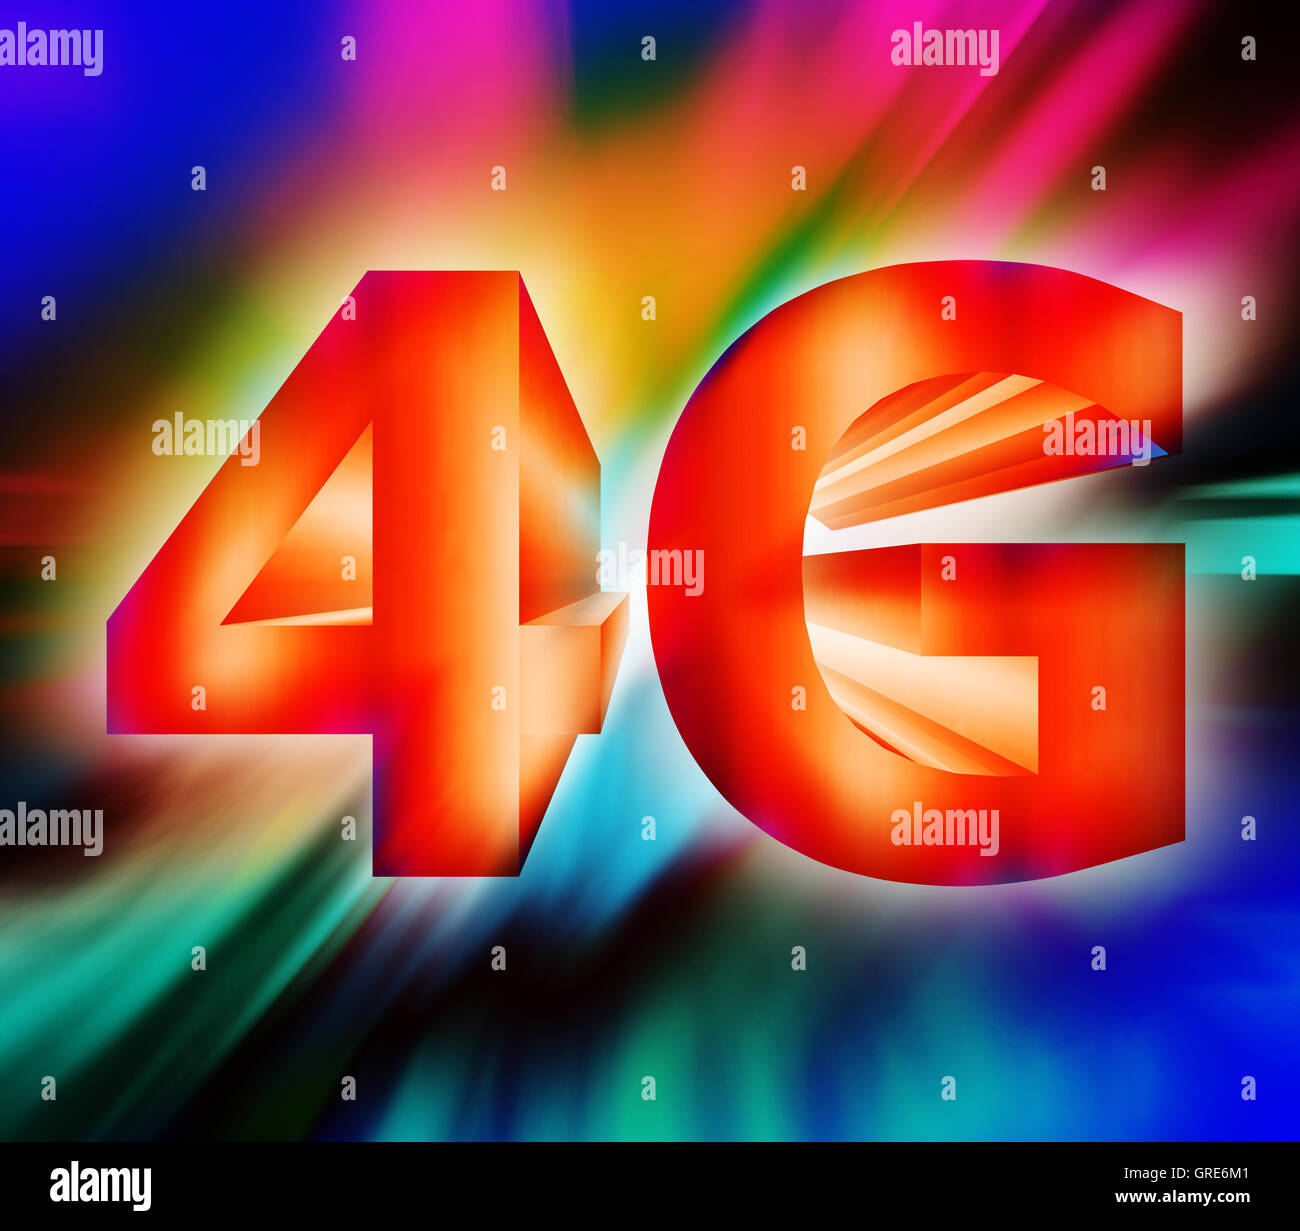 4G network symbol Stock Photo